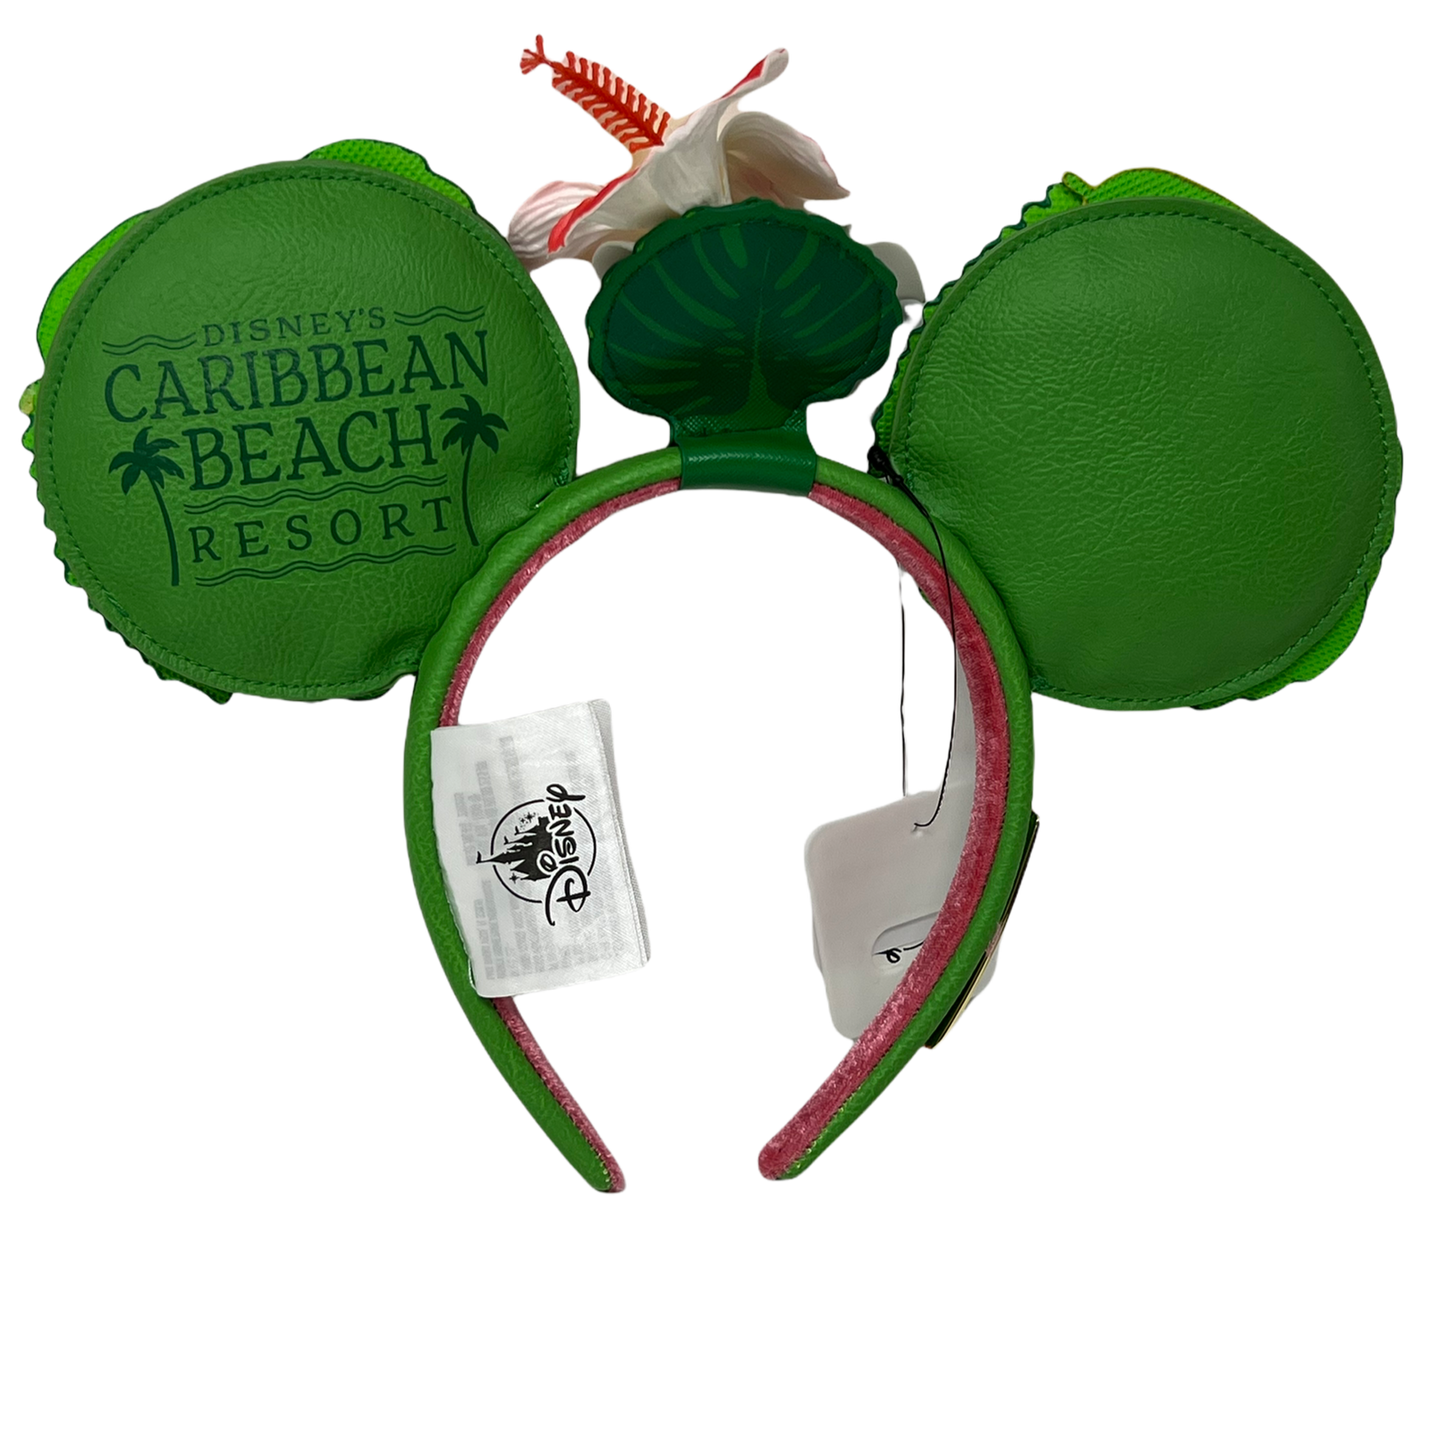 Disney's Caribbean Beach Resort Ears Headband